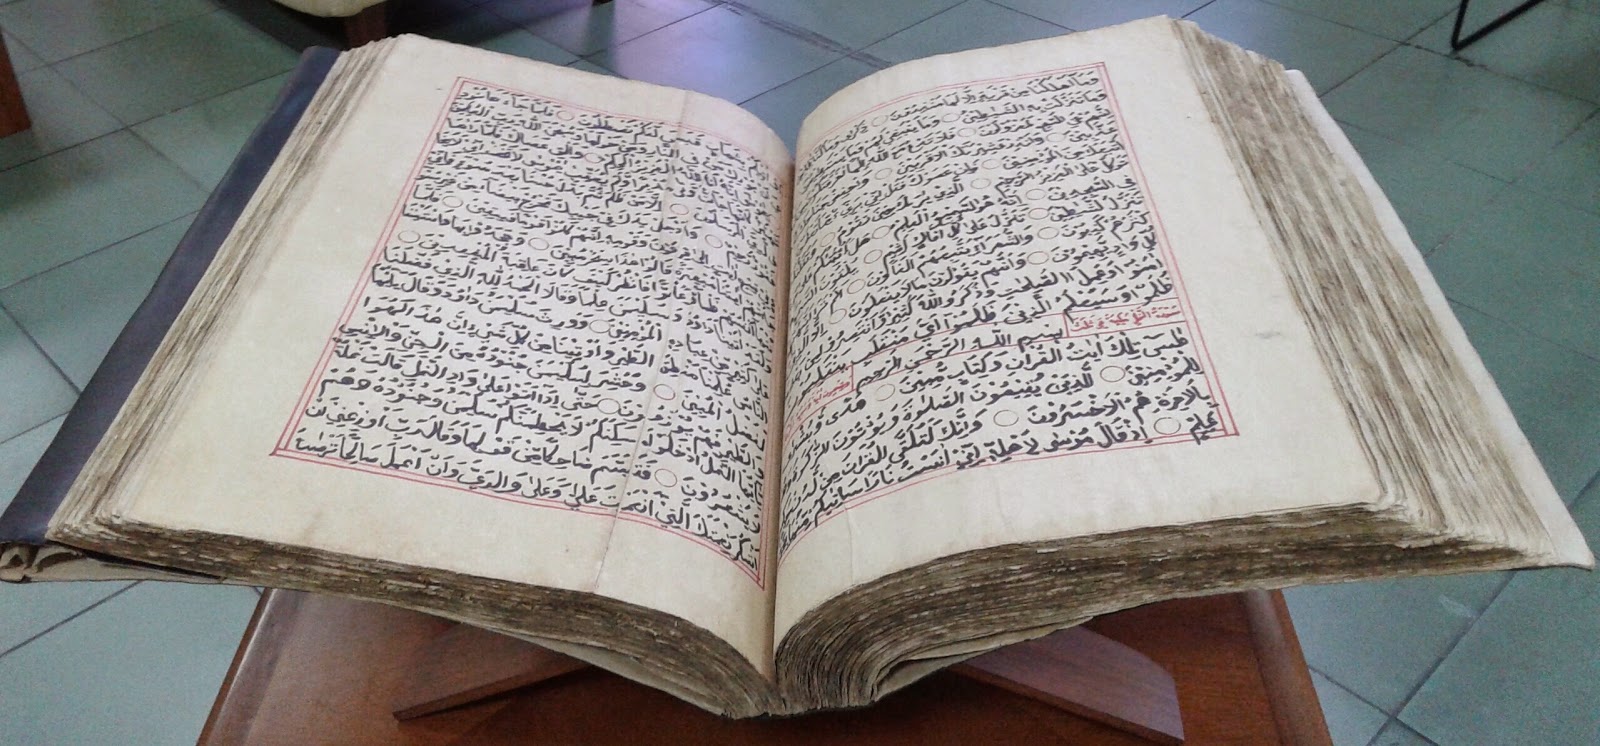 2 153 Коран. 74-42-43 Коран. Коран мишпар беиш эшиги. Найден Коран на куске кожи в Турции. Исламский сонник месячные